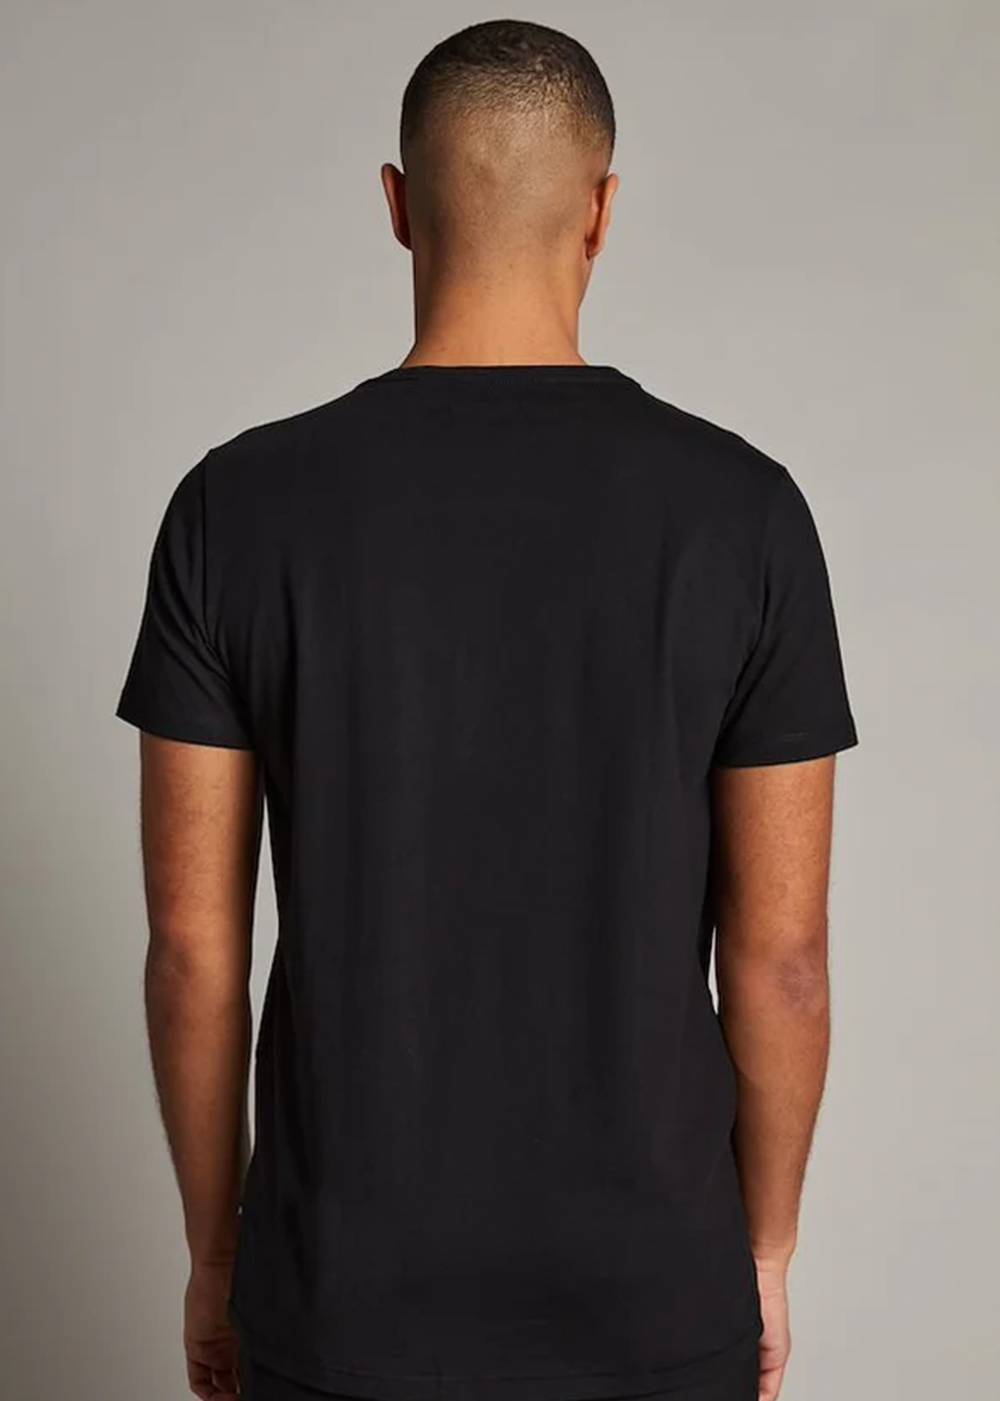 Jermalink Cotton Stretch T-Shirt - Black - Matinique Canada - Danali